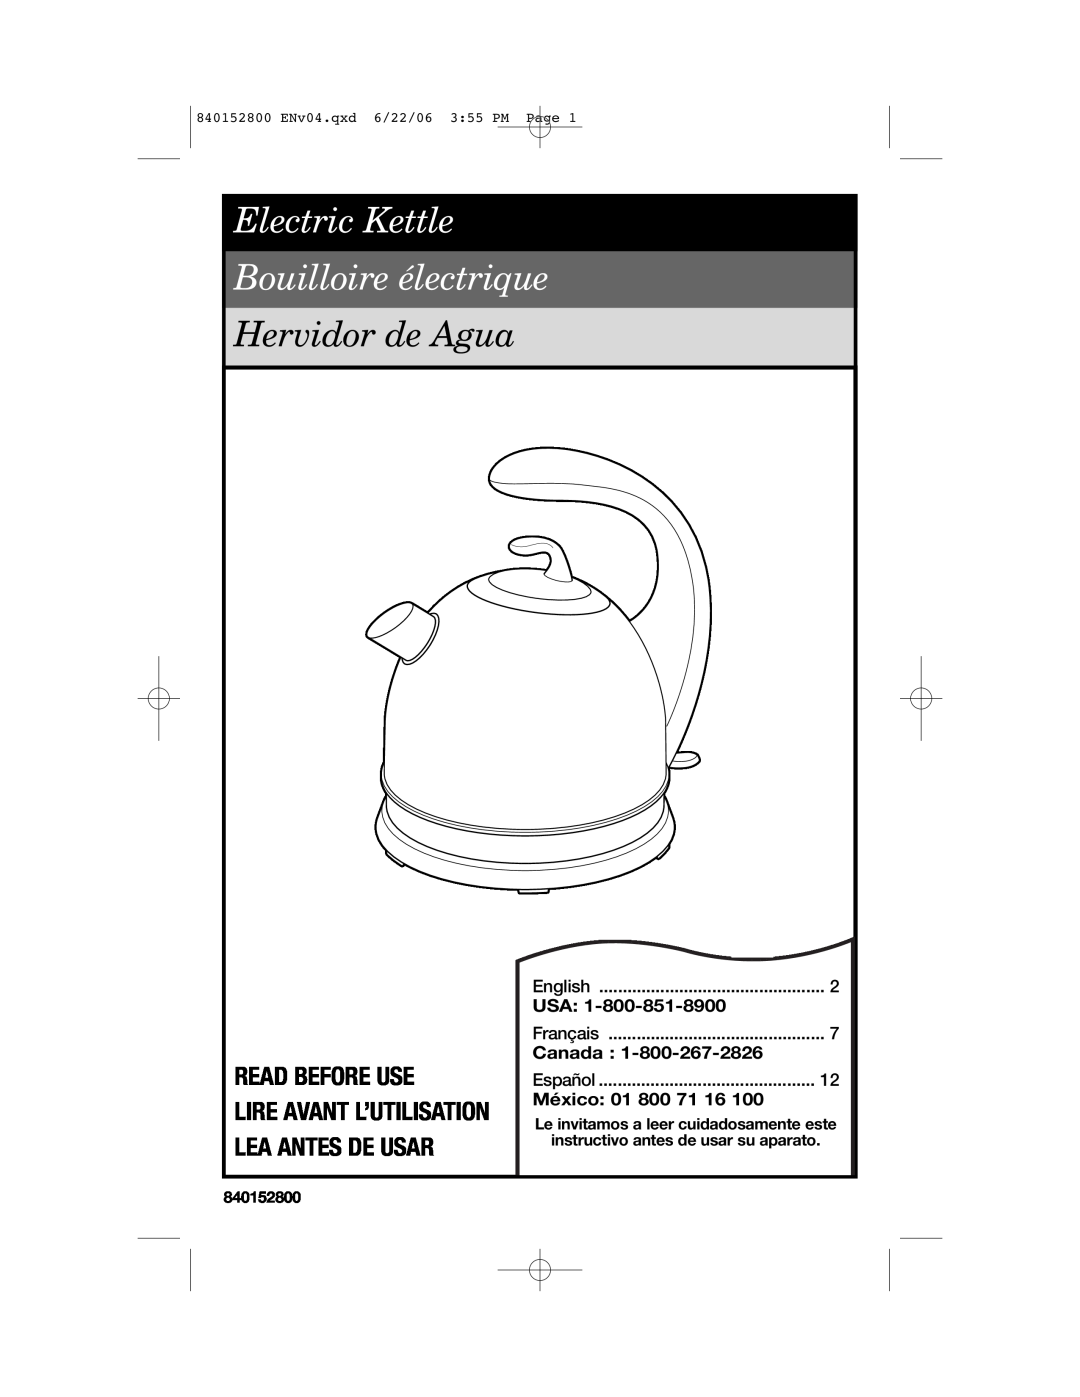 Hamilton Beach 168950 K14 manual Lire Avant L’Utilisation Lea Antes De Usar, Canada, México, Hervidor de Agua, English 